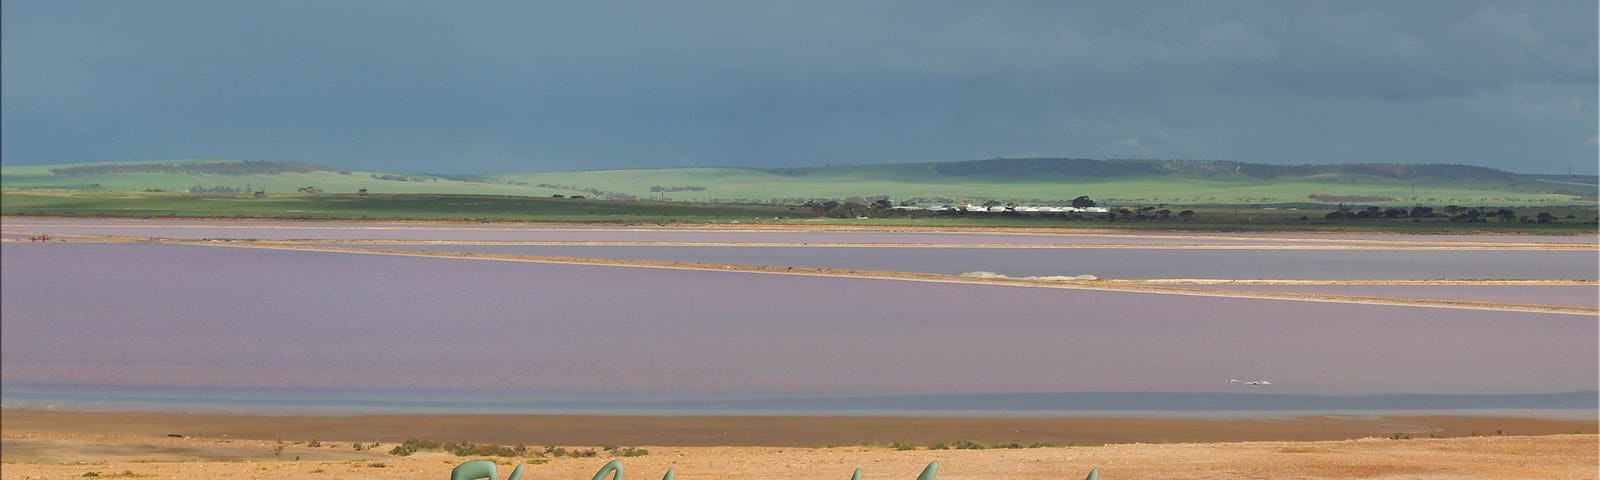 Image of salt lake in South Australia